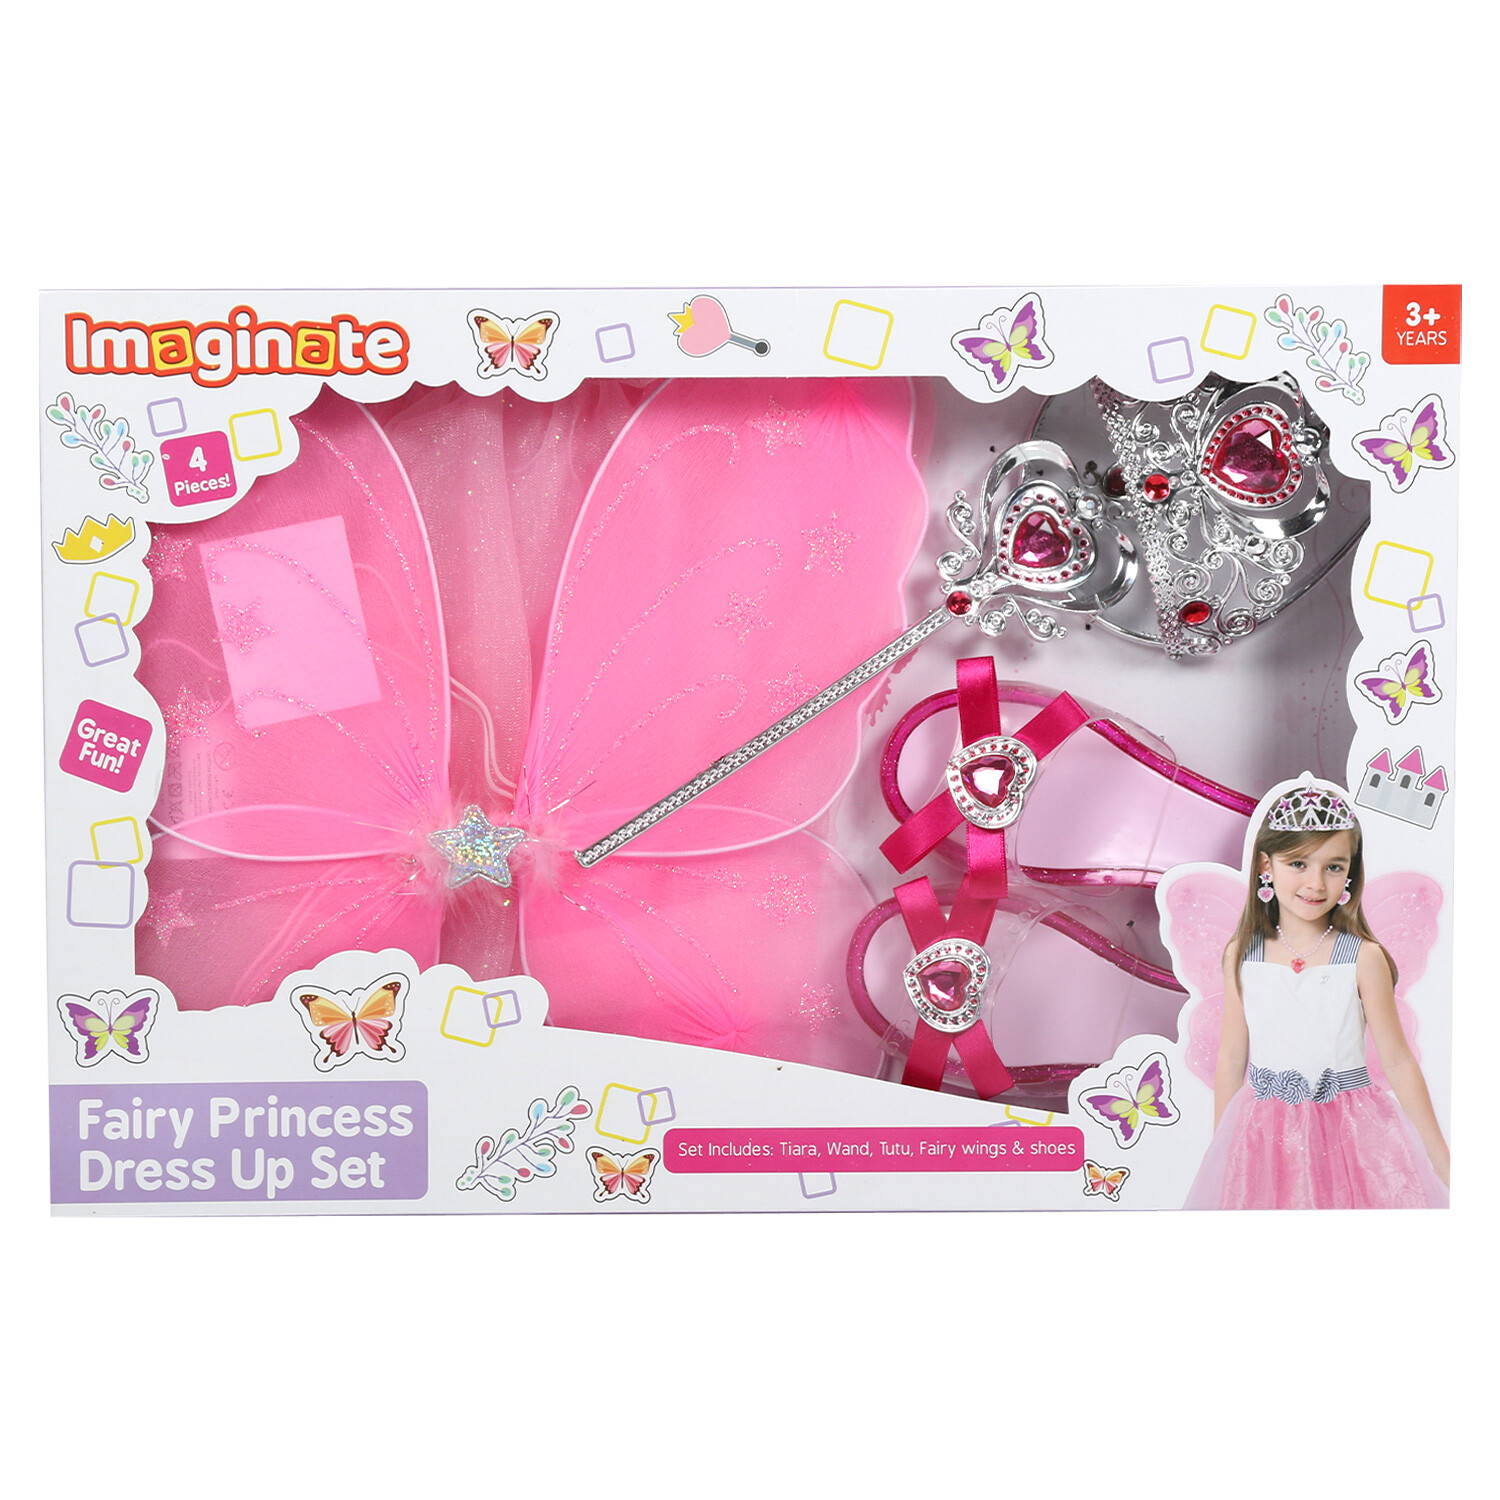 Imaginate Fairy Princess Dress Up Set - Pink Image